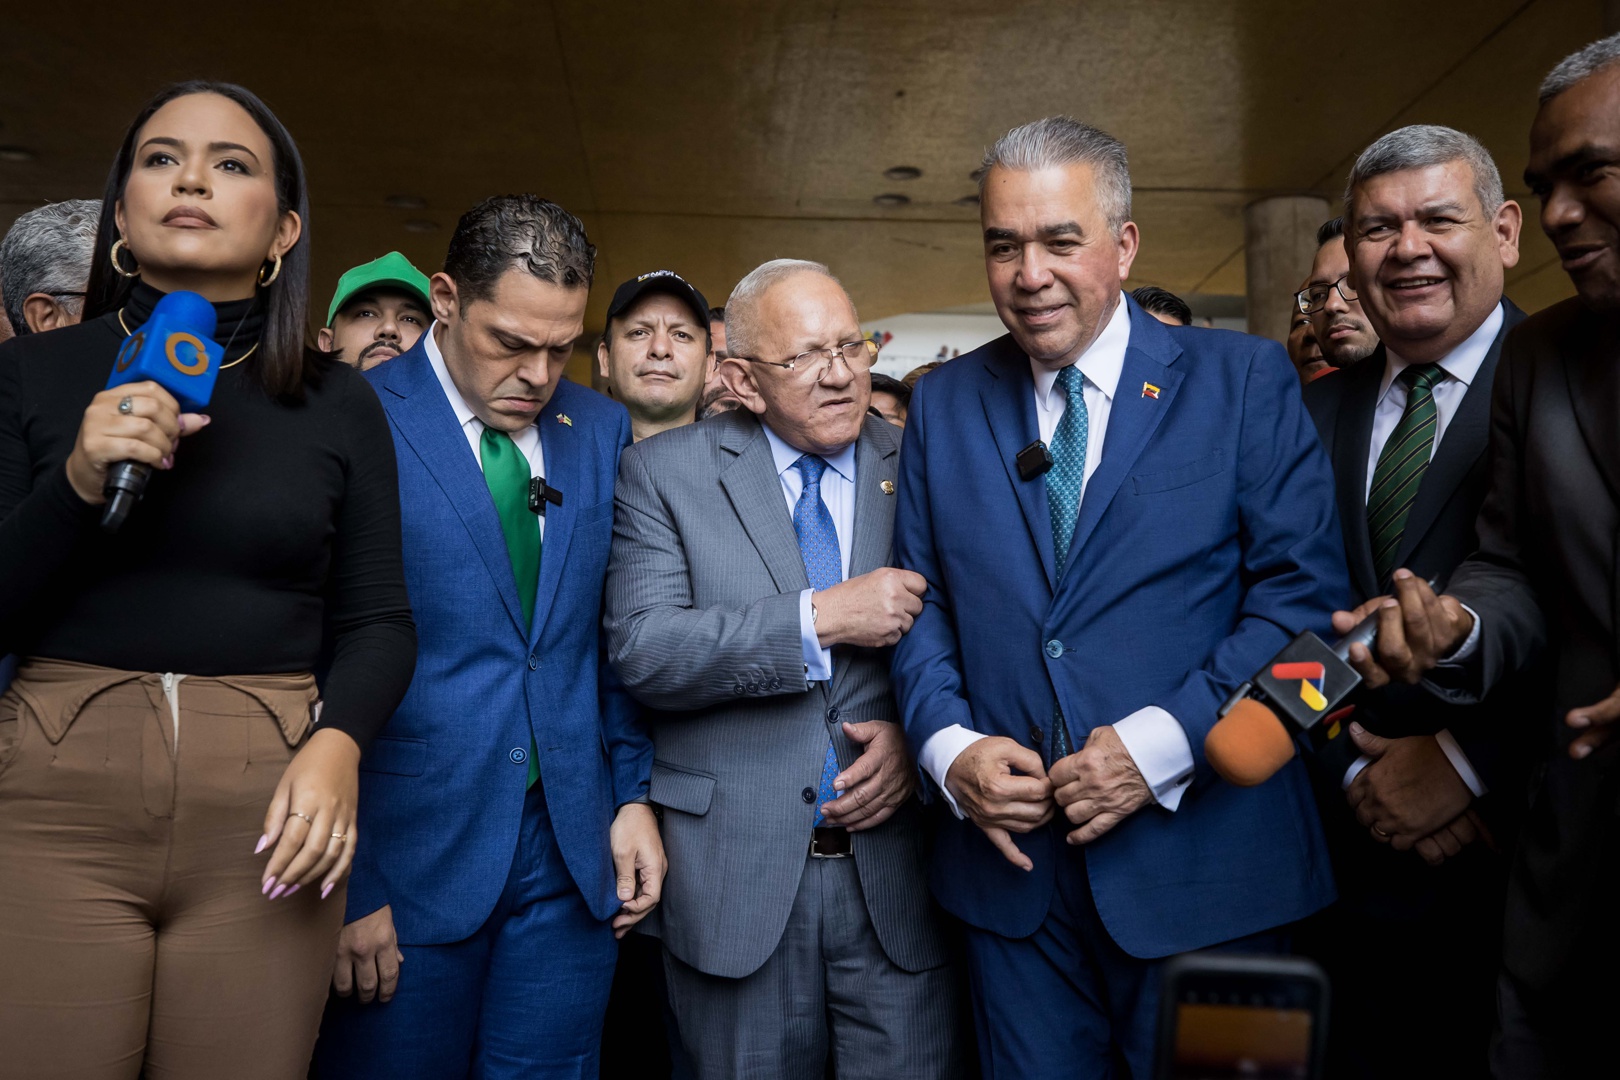 dos candidatos presidenciales de venezuela renuncian en favor de diputado socialdemócrata